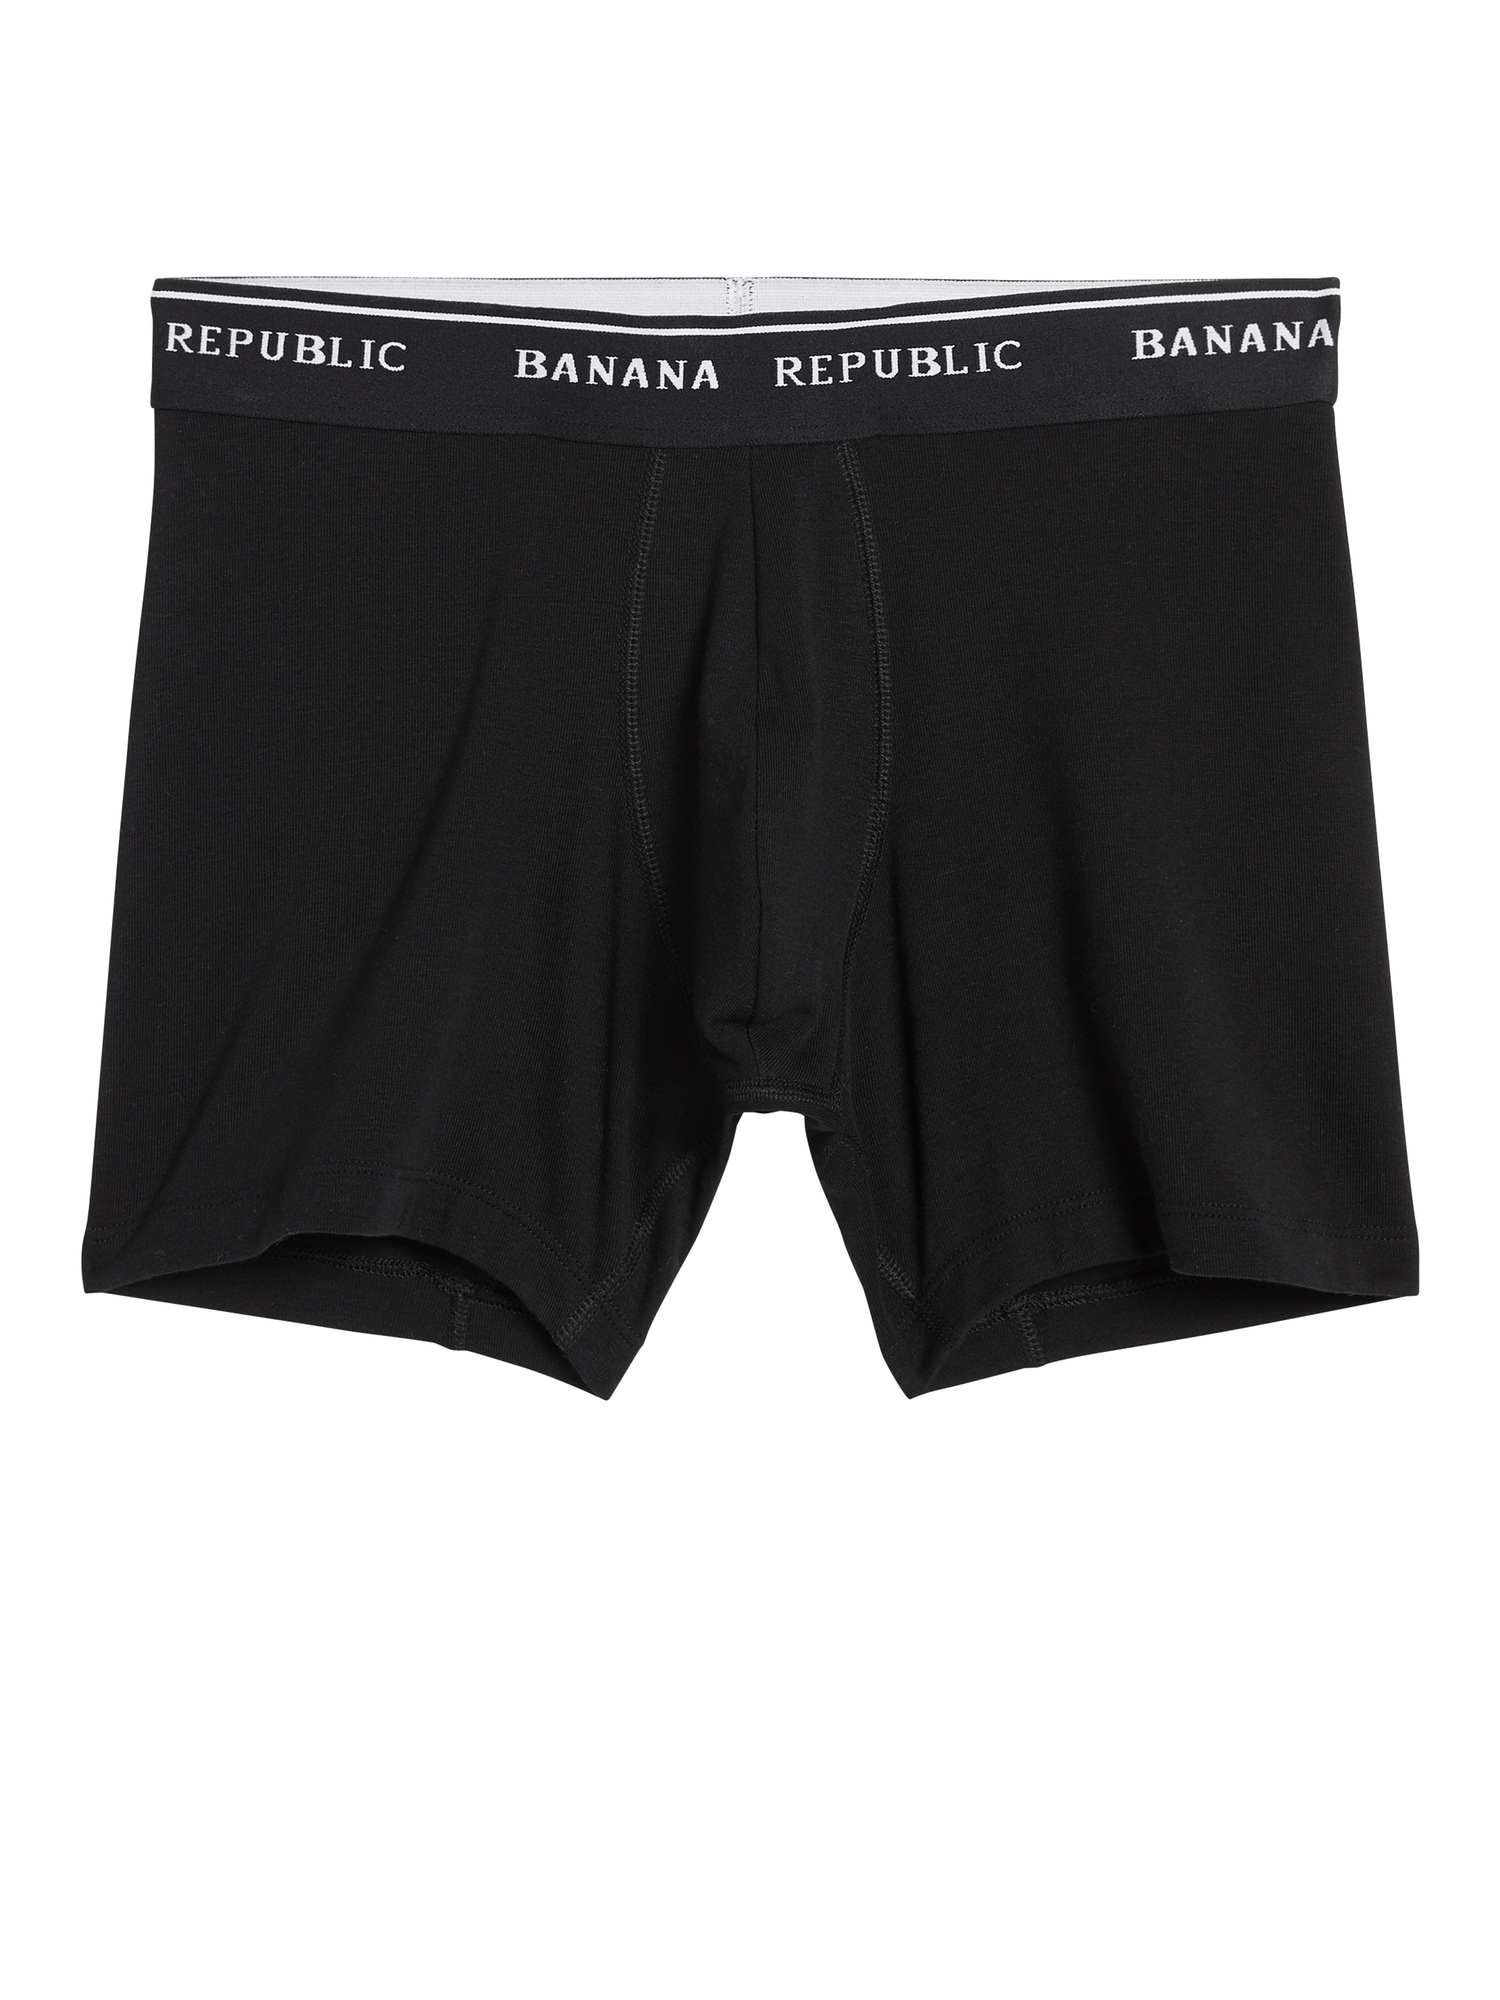 BANANA TRIP, Disposable Cotton Men's Briefs L 5 Pack│Travel Portable  Underwear│Cotton Underwear│Travel, Size : L